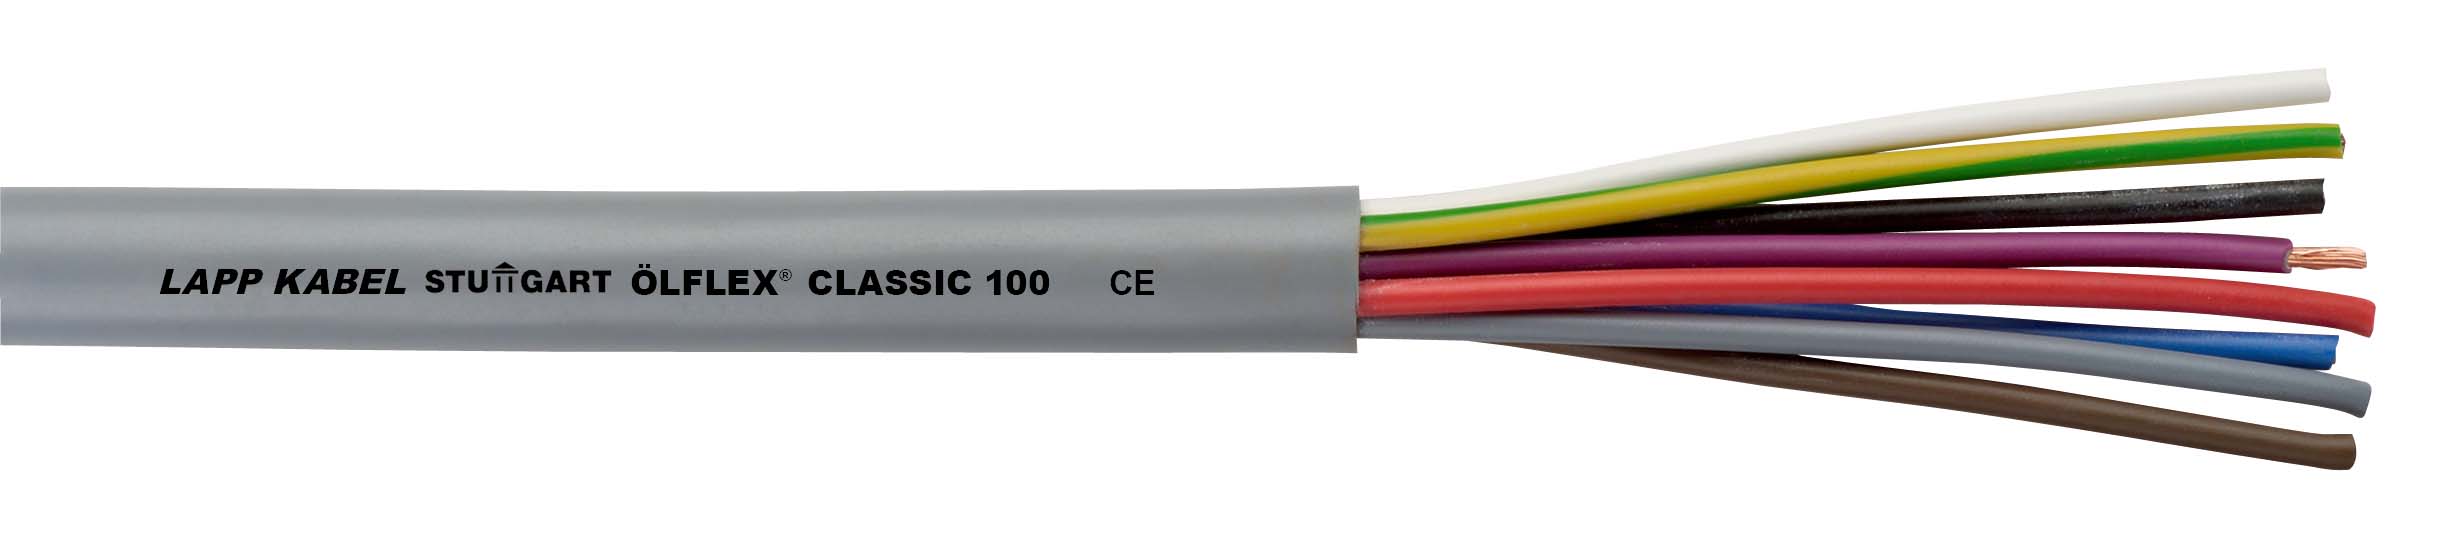 Lapp Kabel&Leitung ÖLFLEX CLASSIC 100 3G2,5 0010087 T500 - 0010087/500